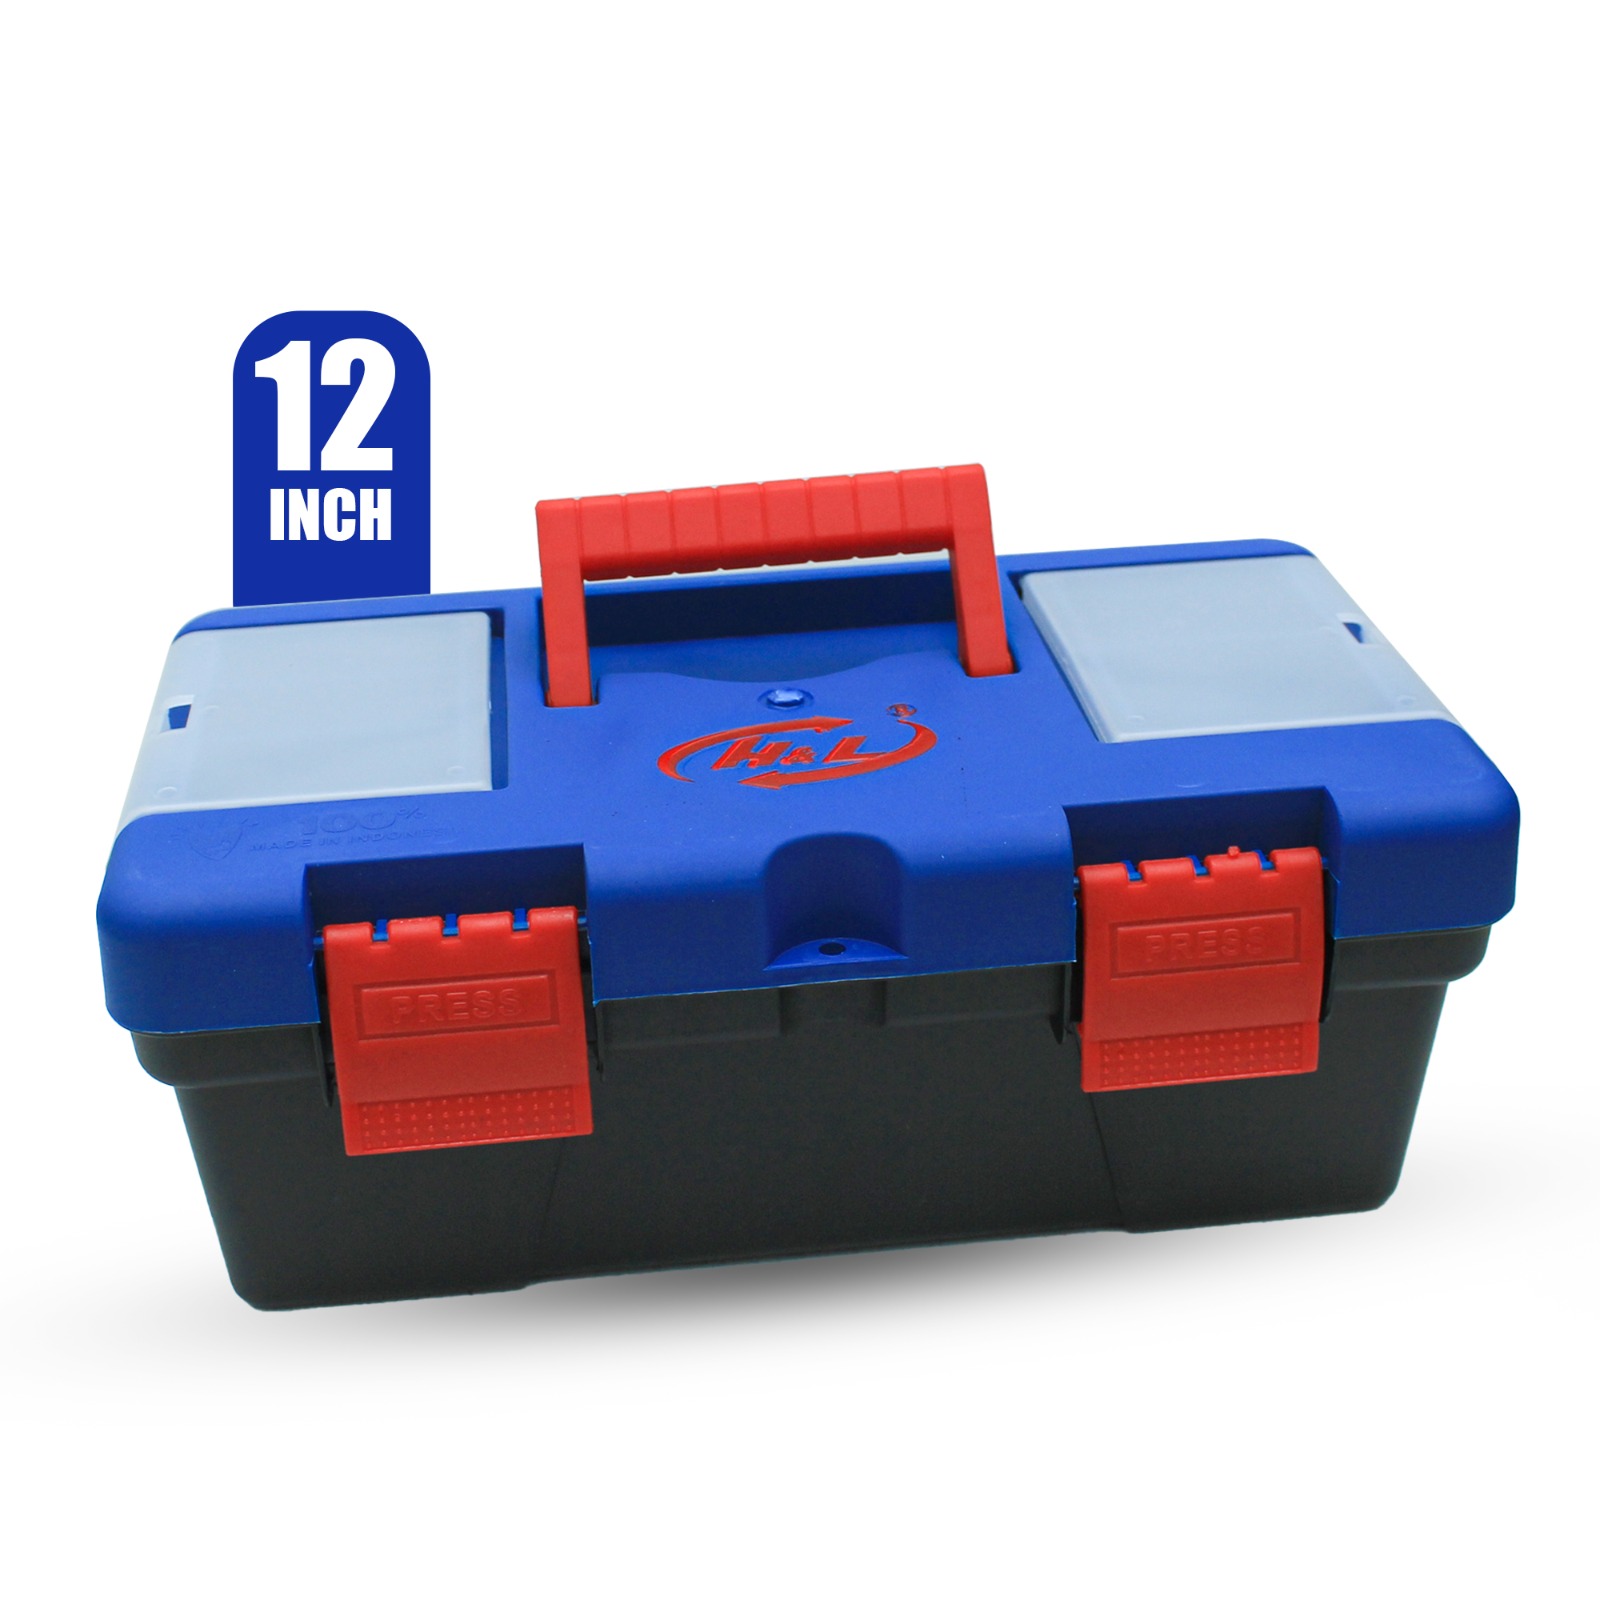 ISKU Hnl Tool Box Mini 12 Inch Kotak Perkakas Kecil 30 14 12cm Kotak Alat  Multi